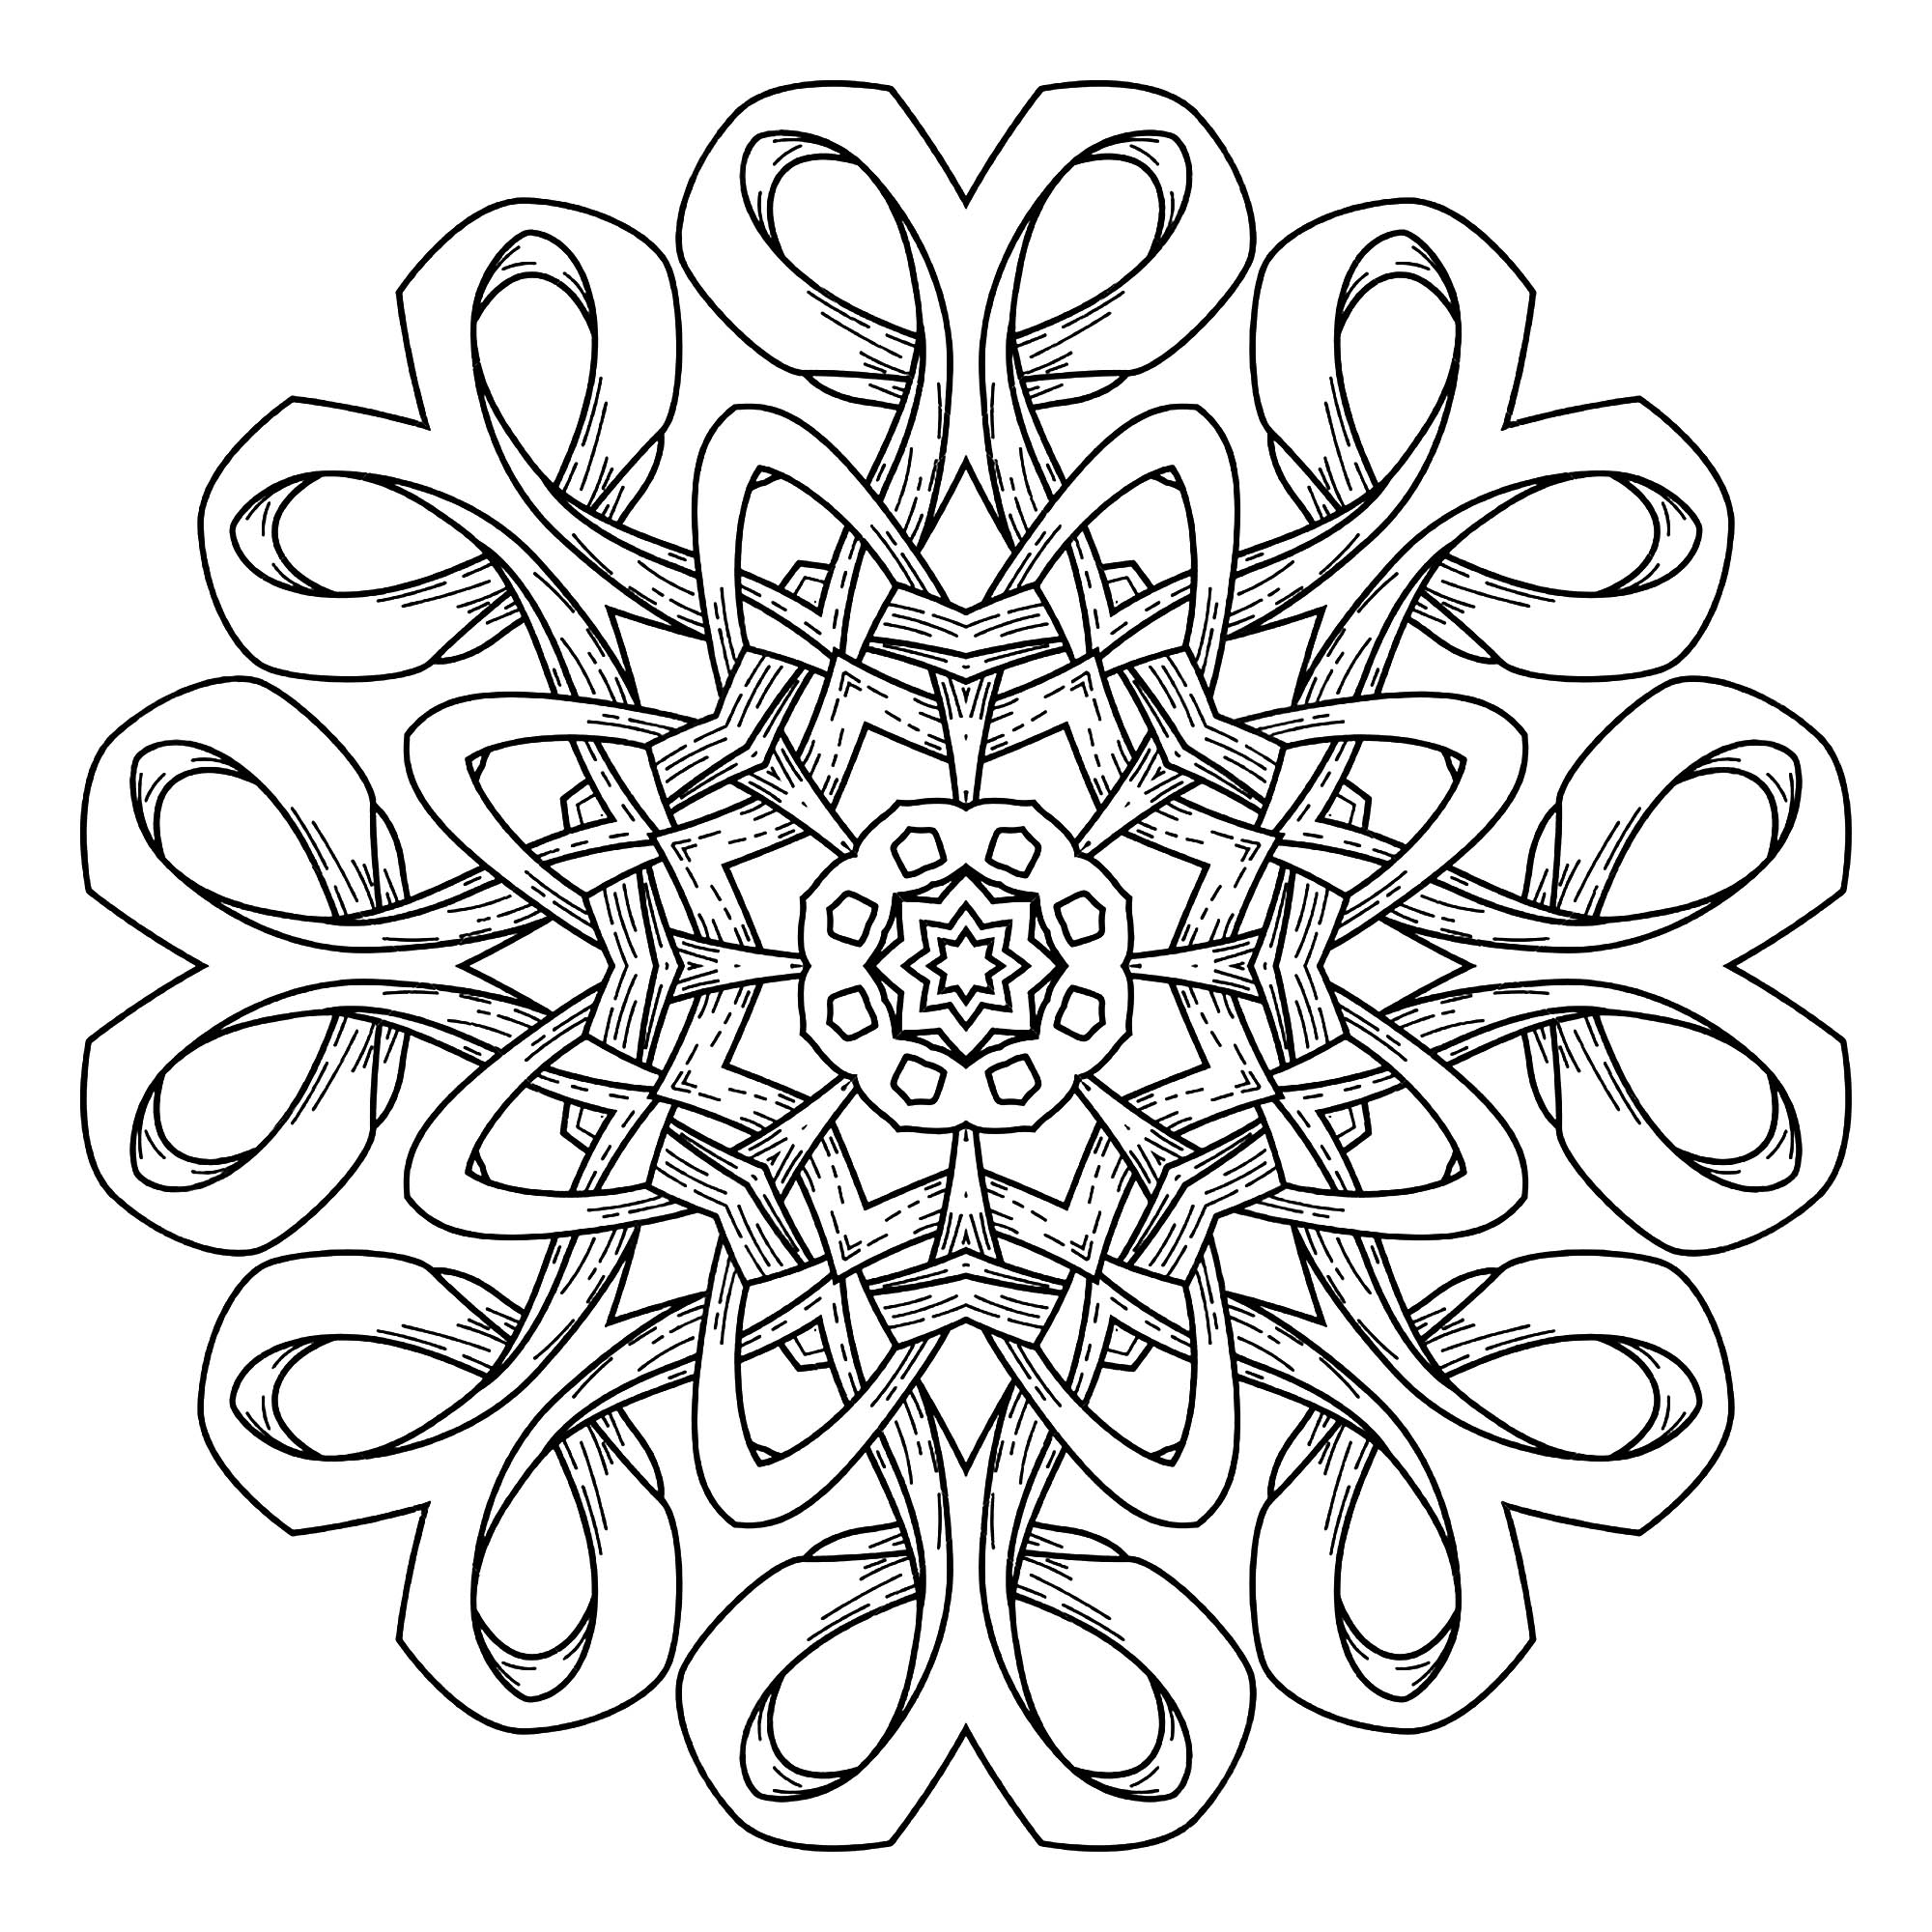 Islam, Arabic, oriental, indian, ottoman, yoga motifs. Vector illustration of a Mandala